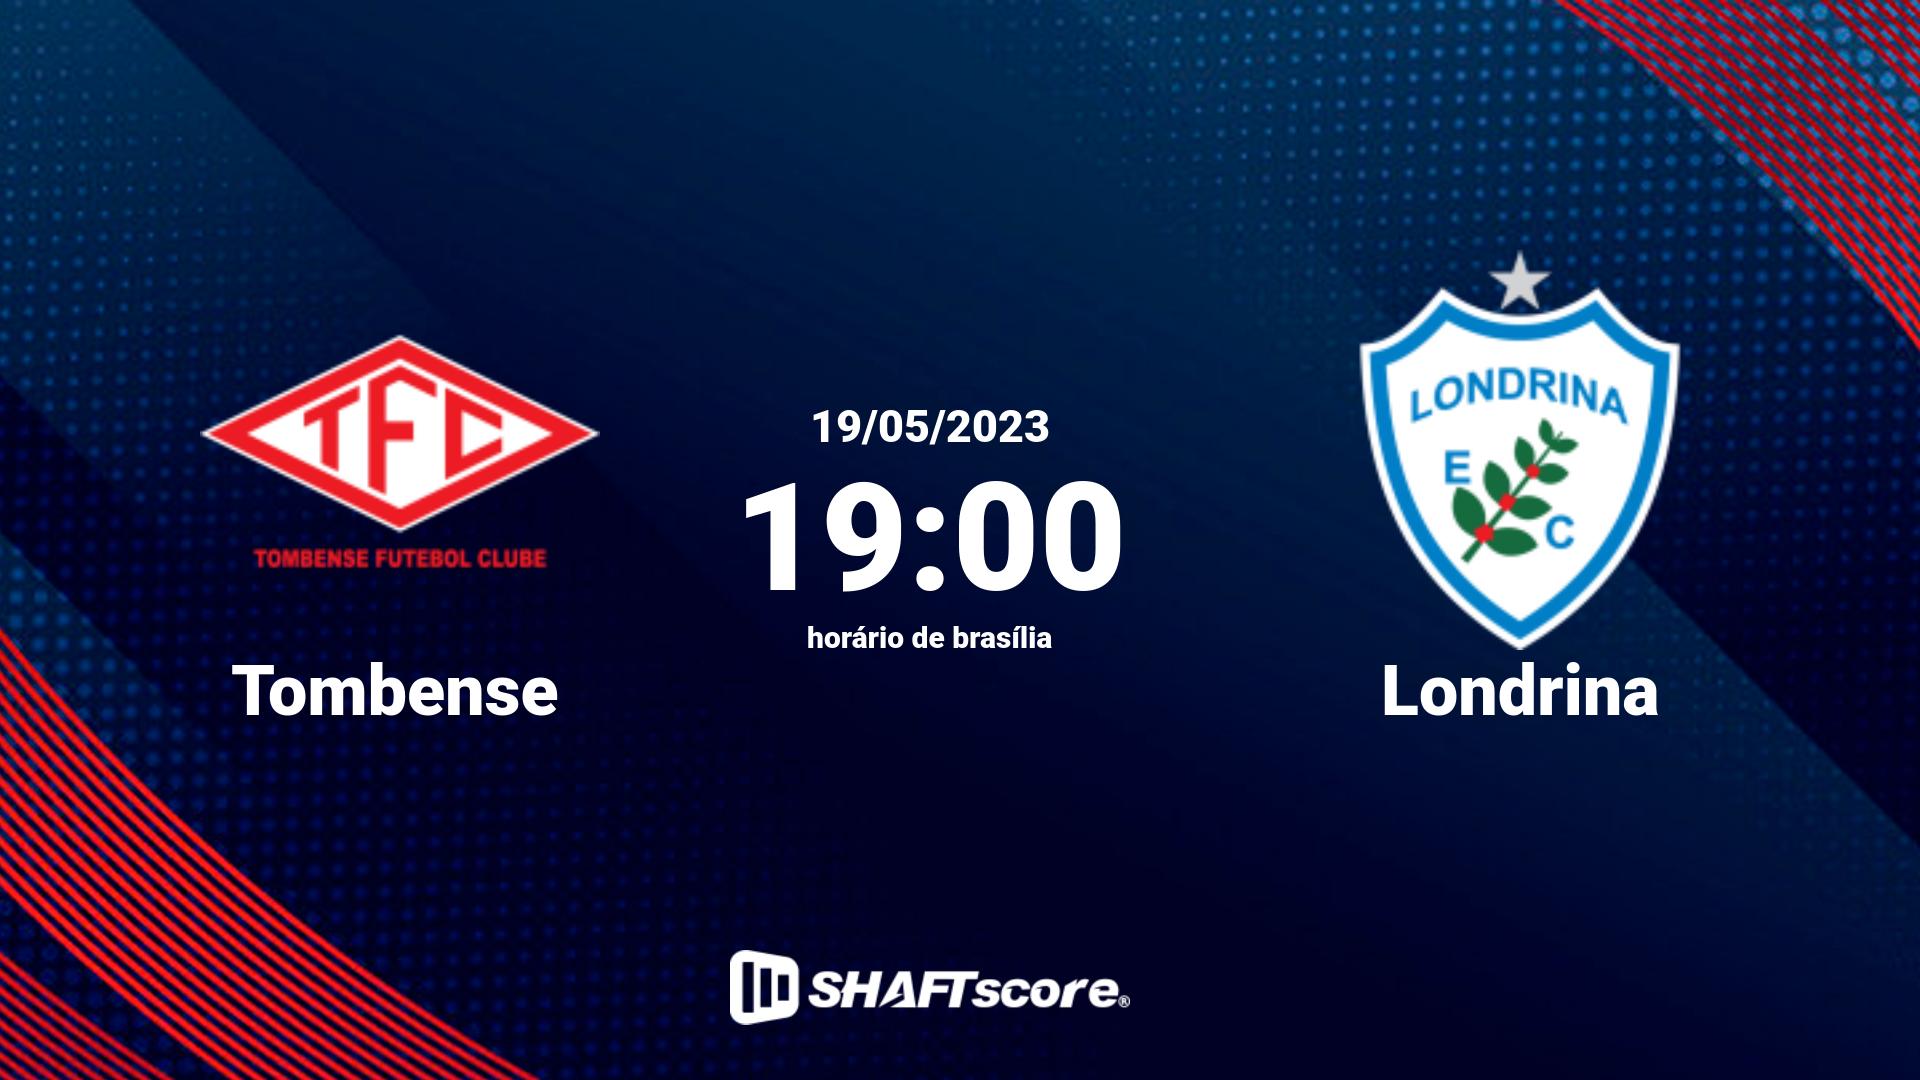 Estatísticas do jogo Tombense vs Londrina 19.05 19:00